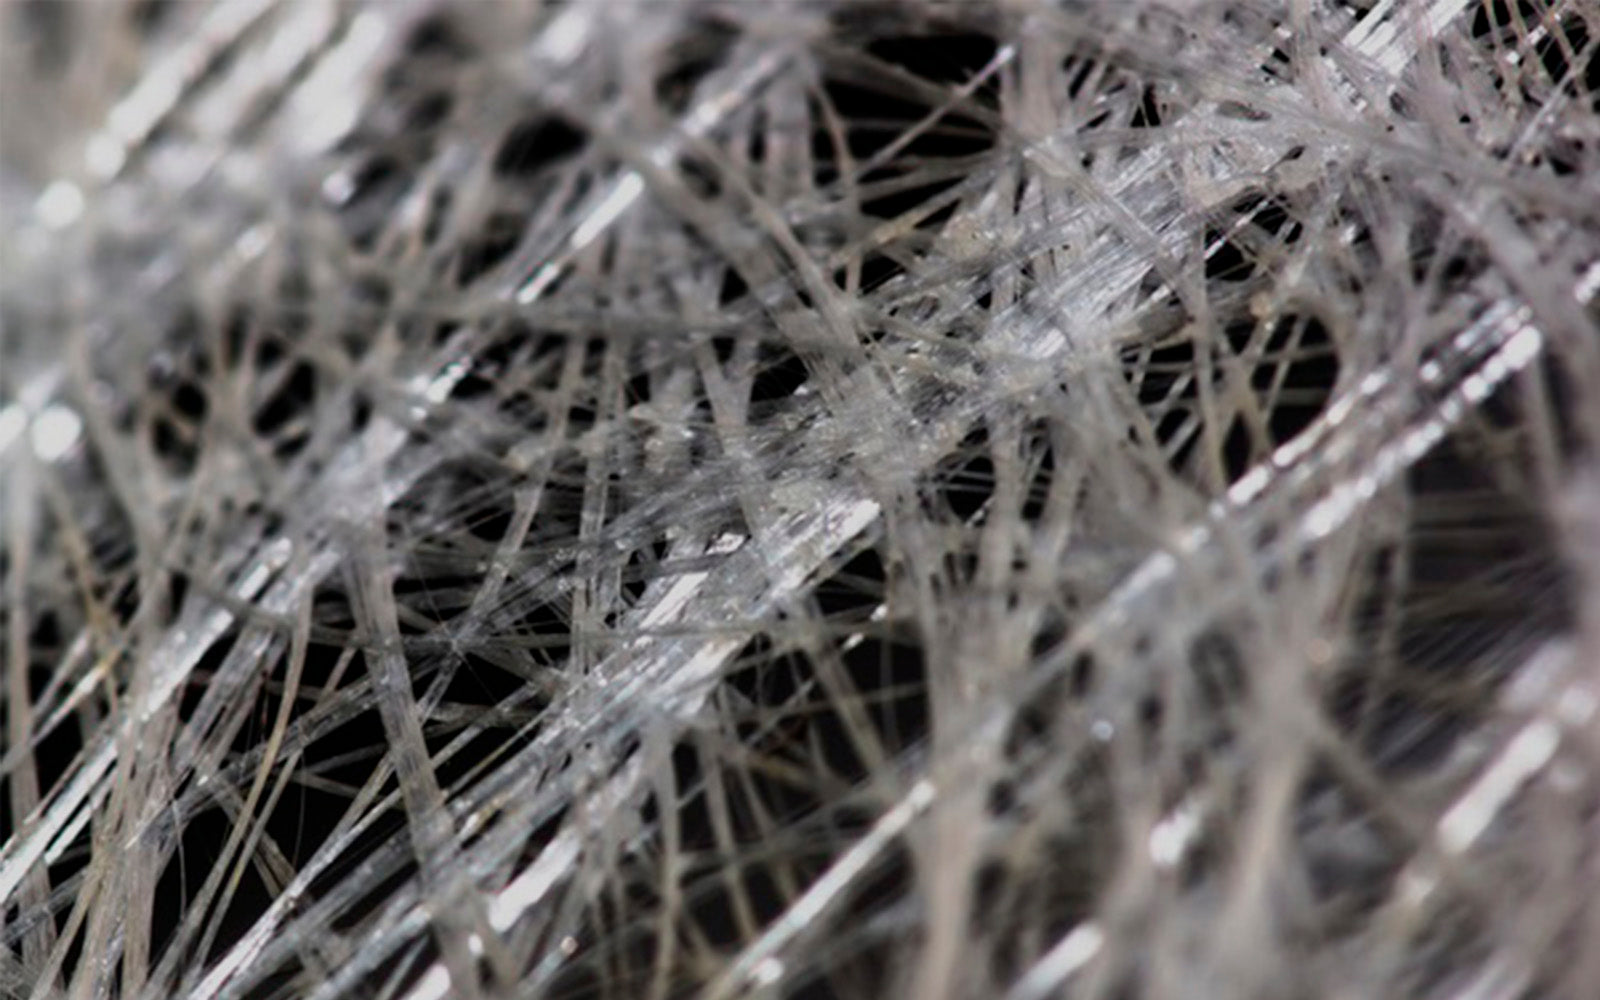 Closeup image of fiberglass illustrating shards of glass fibers